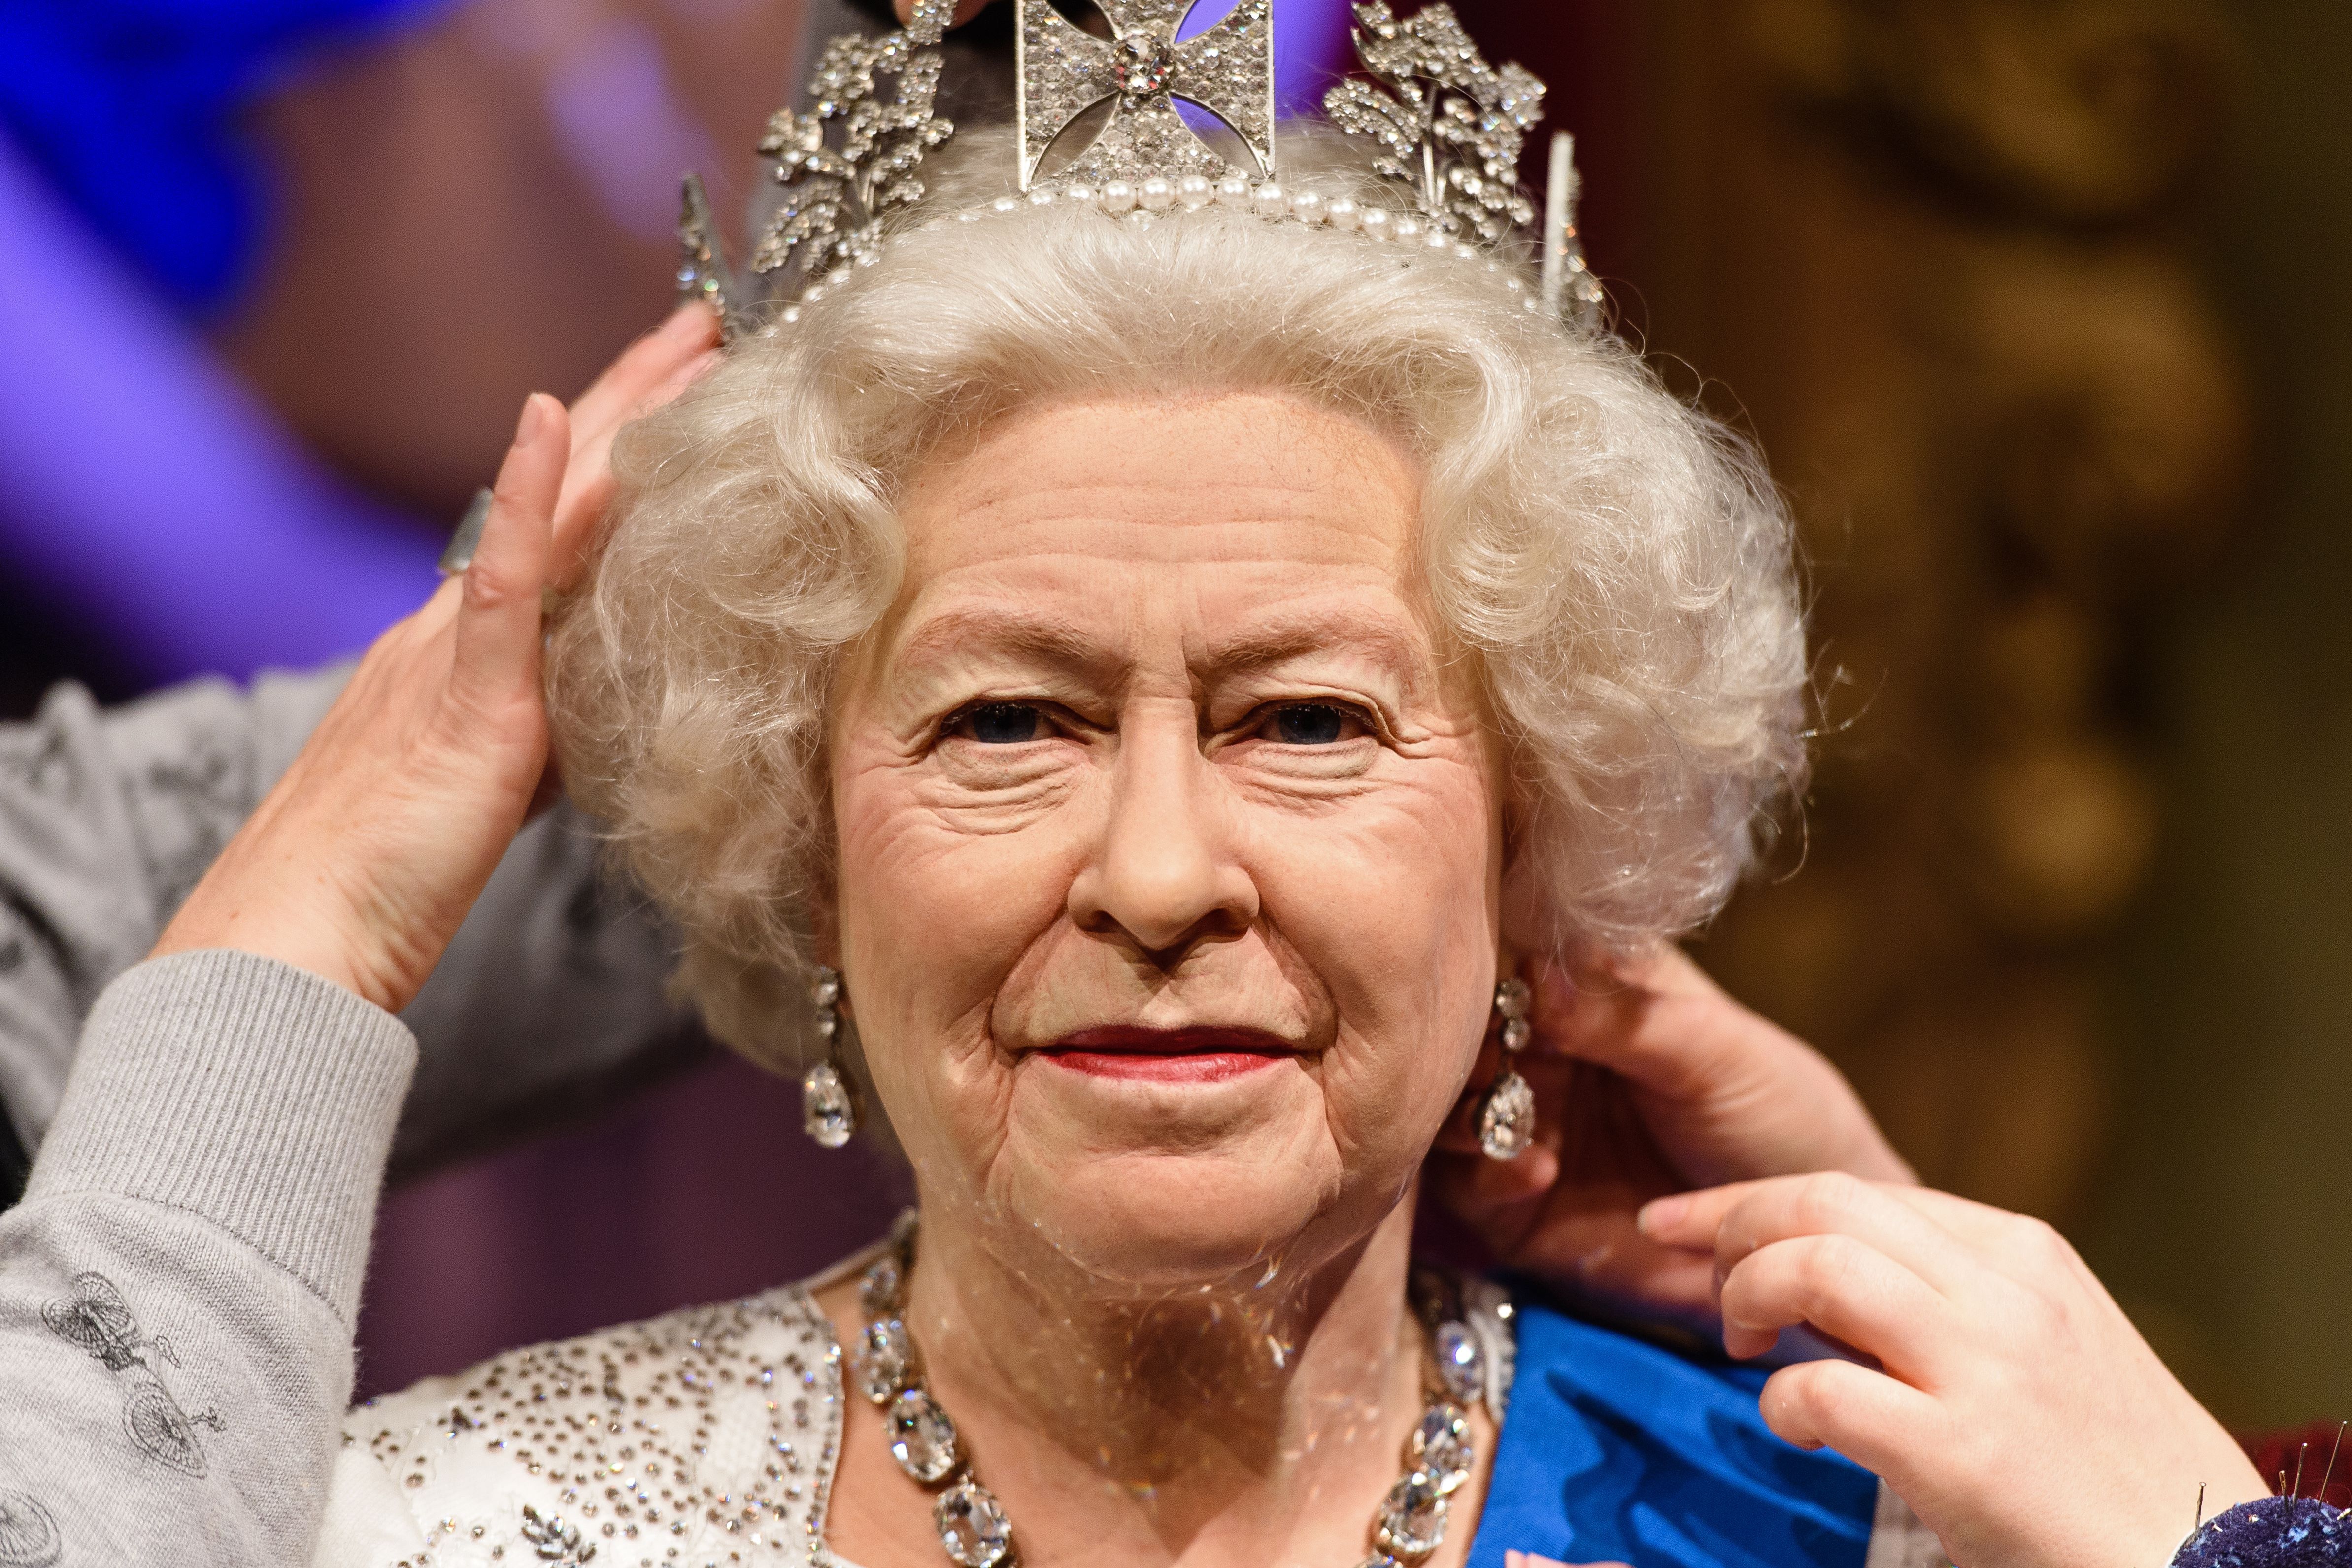 La Reine Elizabeth Ii Queen Elizabeth II Is About To Be The Longest-Serving Royal In British